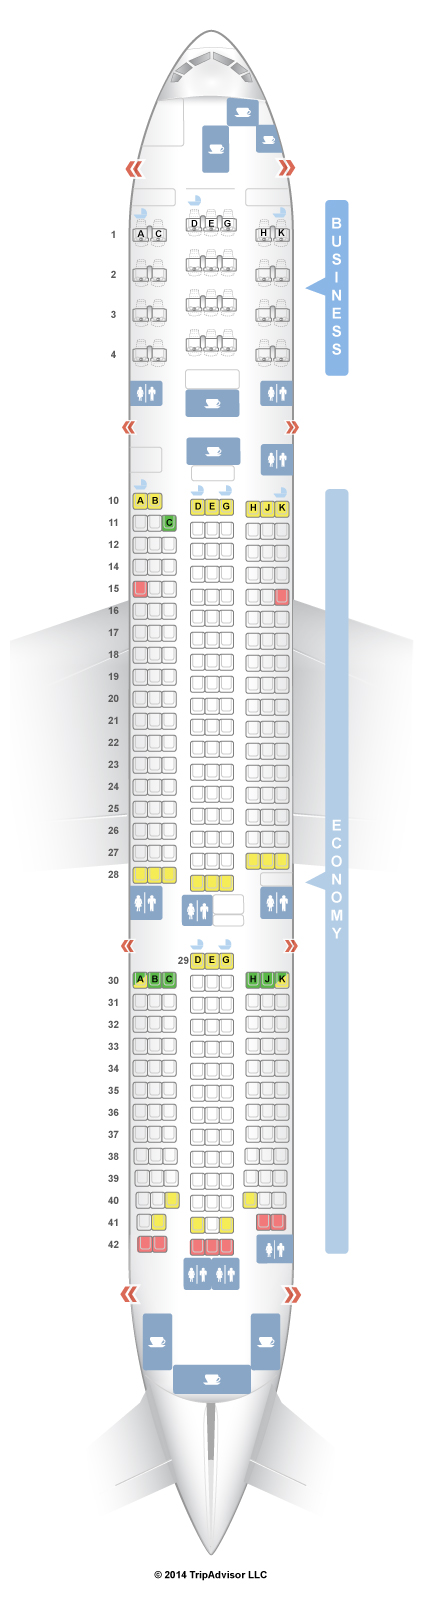 asiana boeing 777 seating chart - Part.tscoreks.org